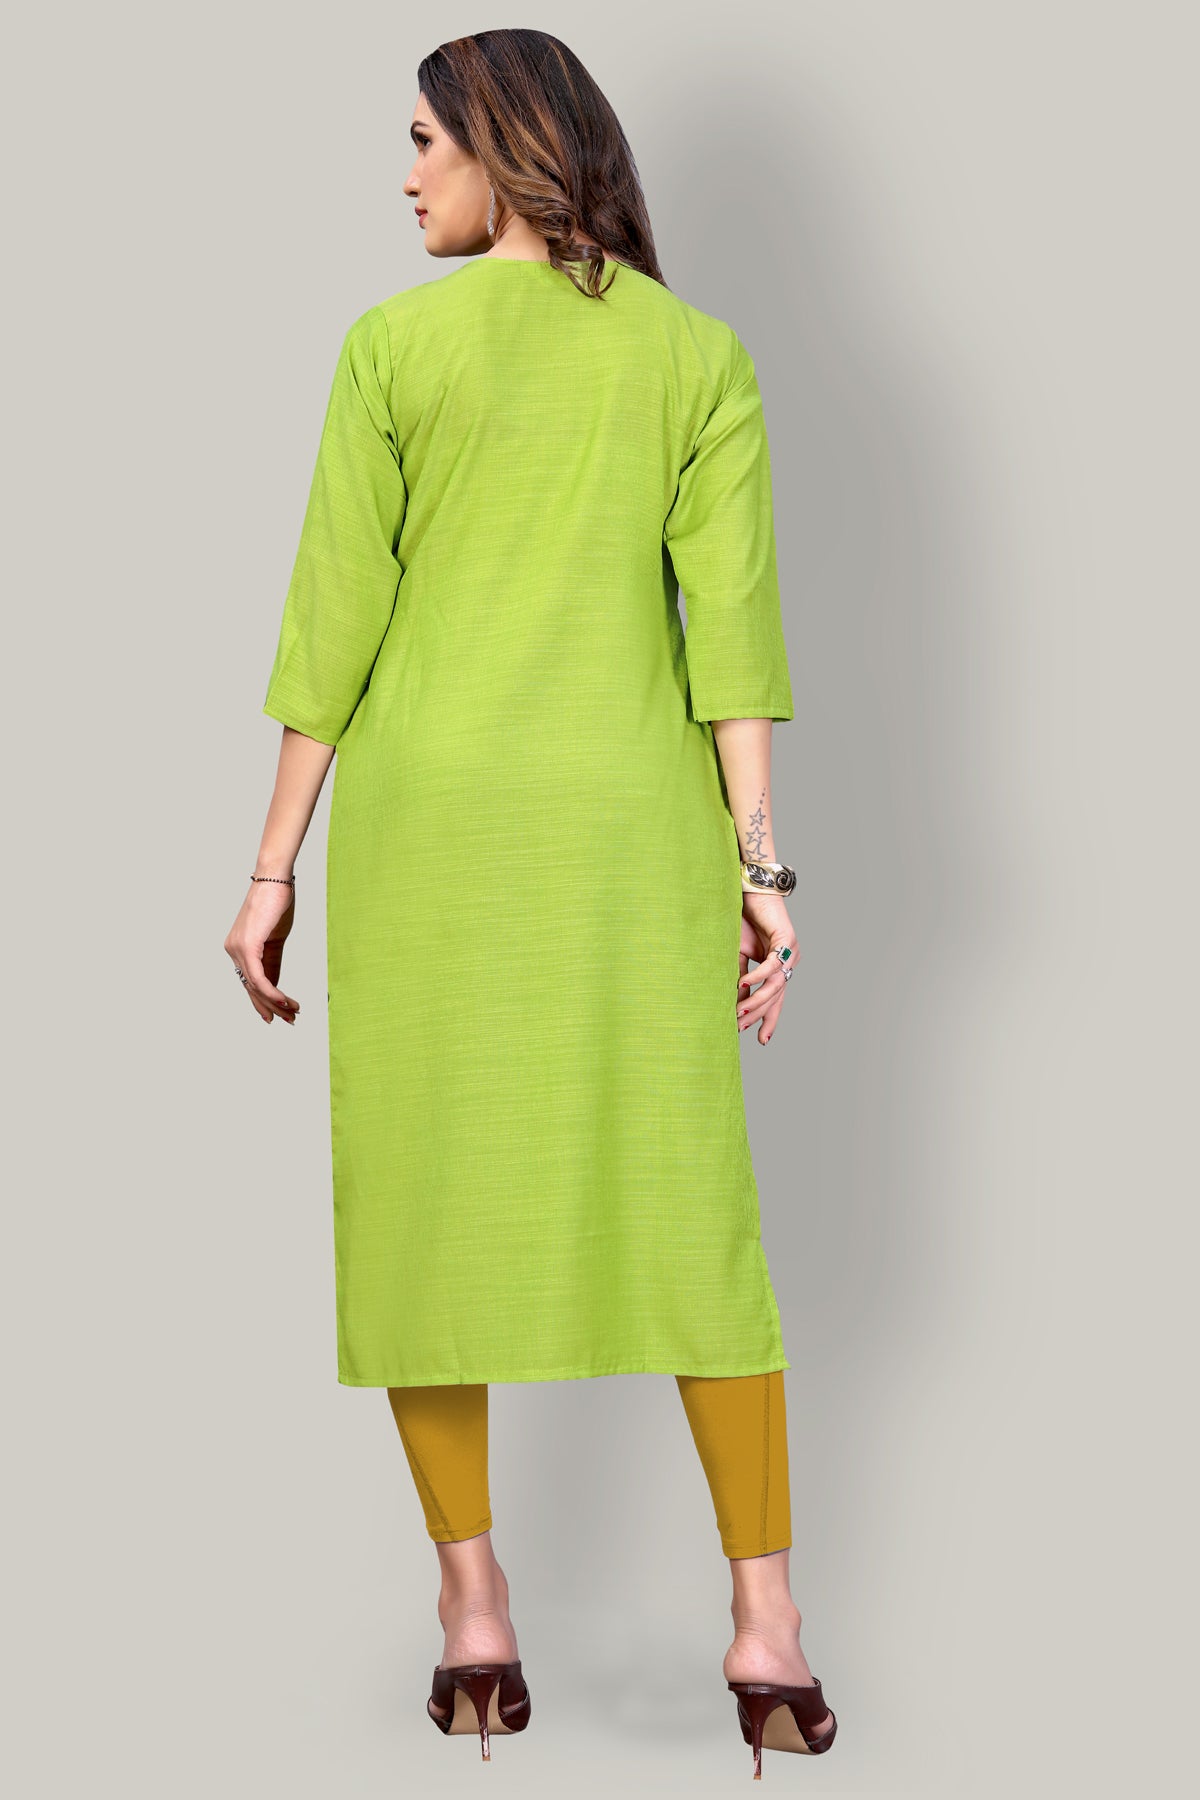 Buy Parrot Green Silk kurti with stylish handwork